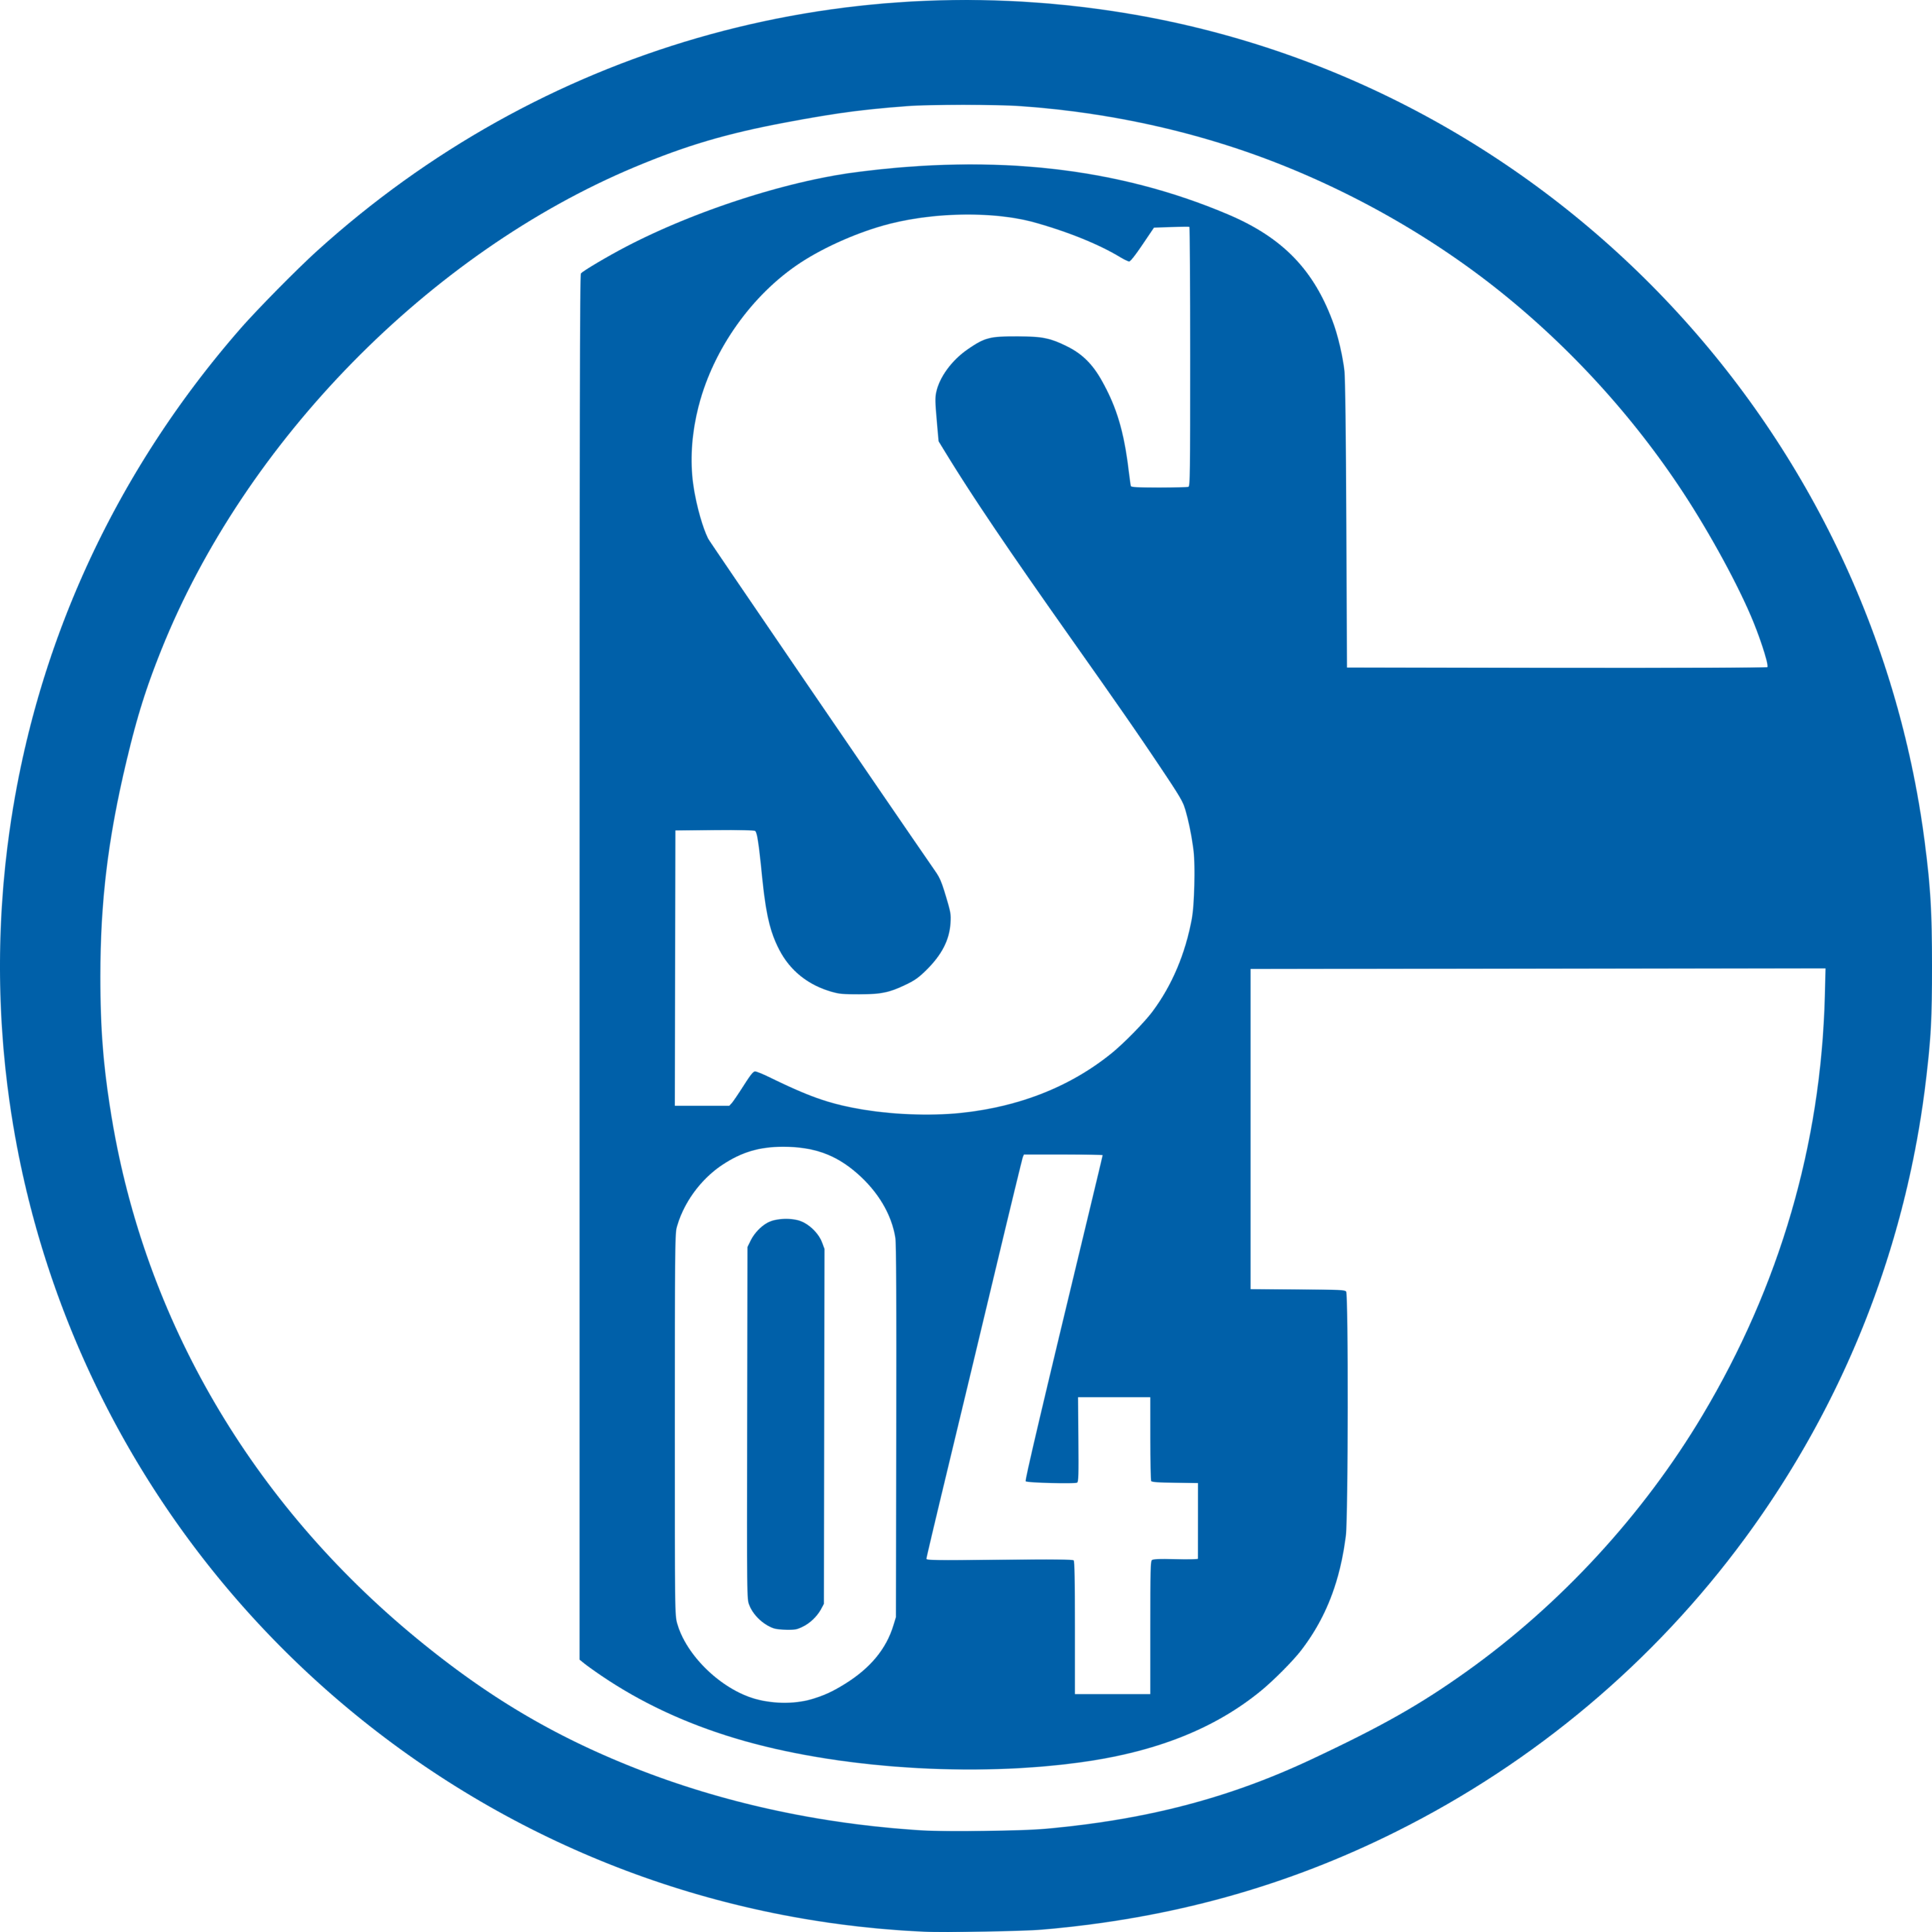 FC Schalke 04 Logo 1995